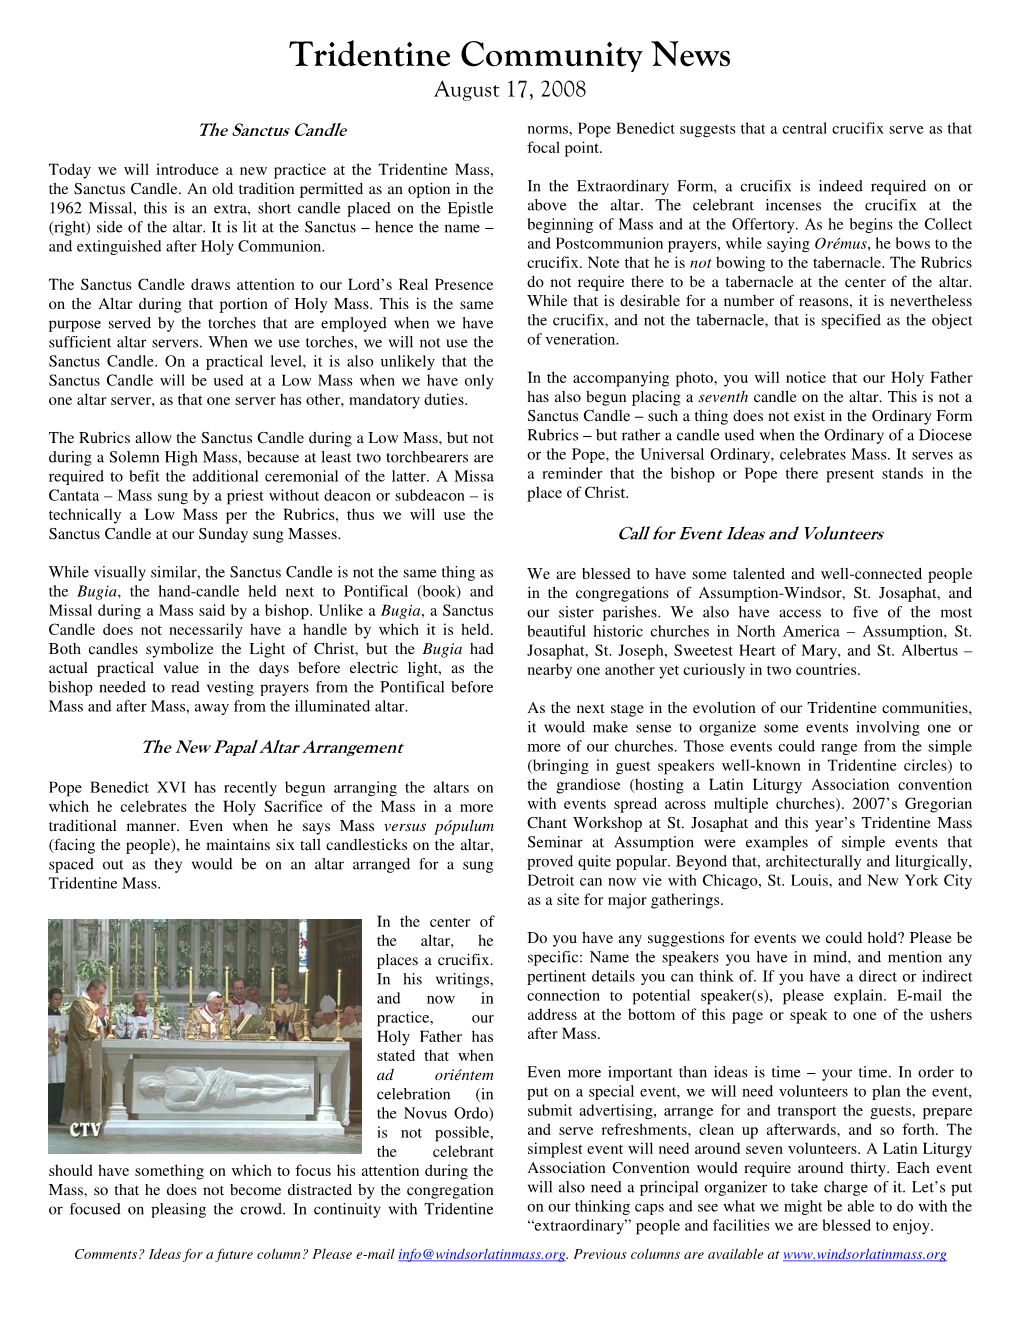 Tridentine Community News August 17, 2008